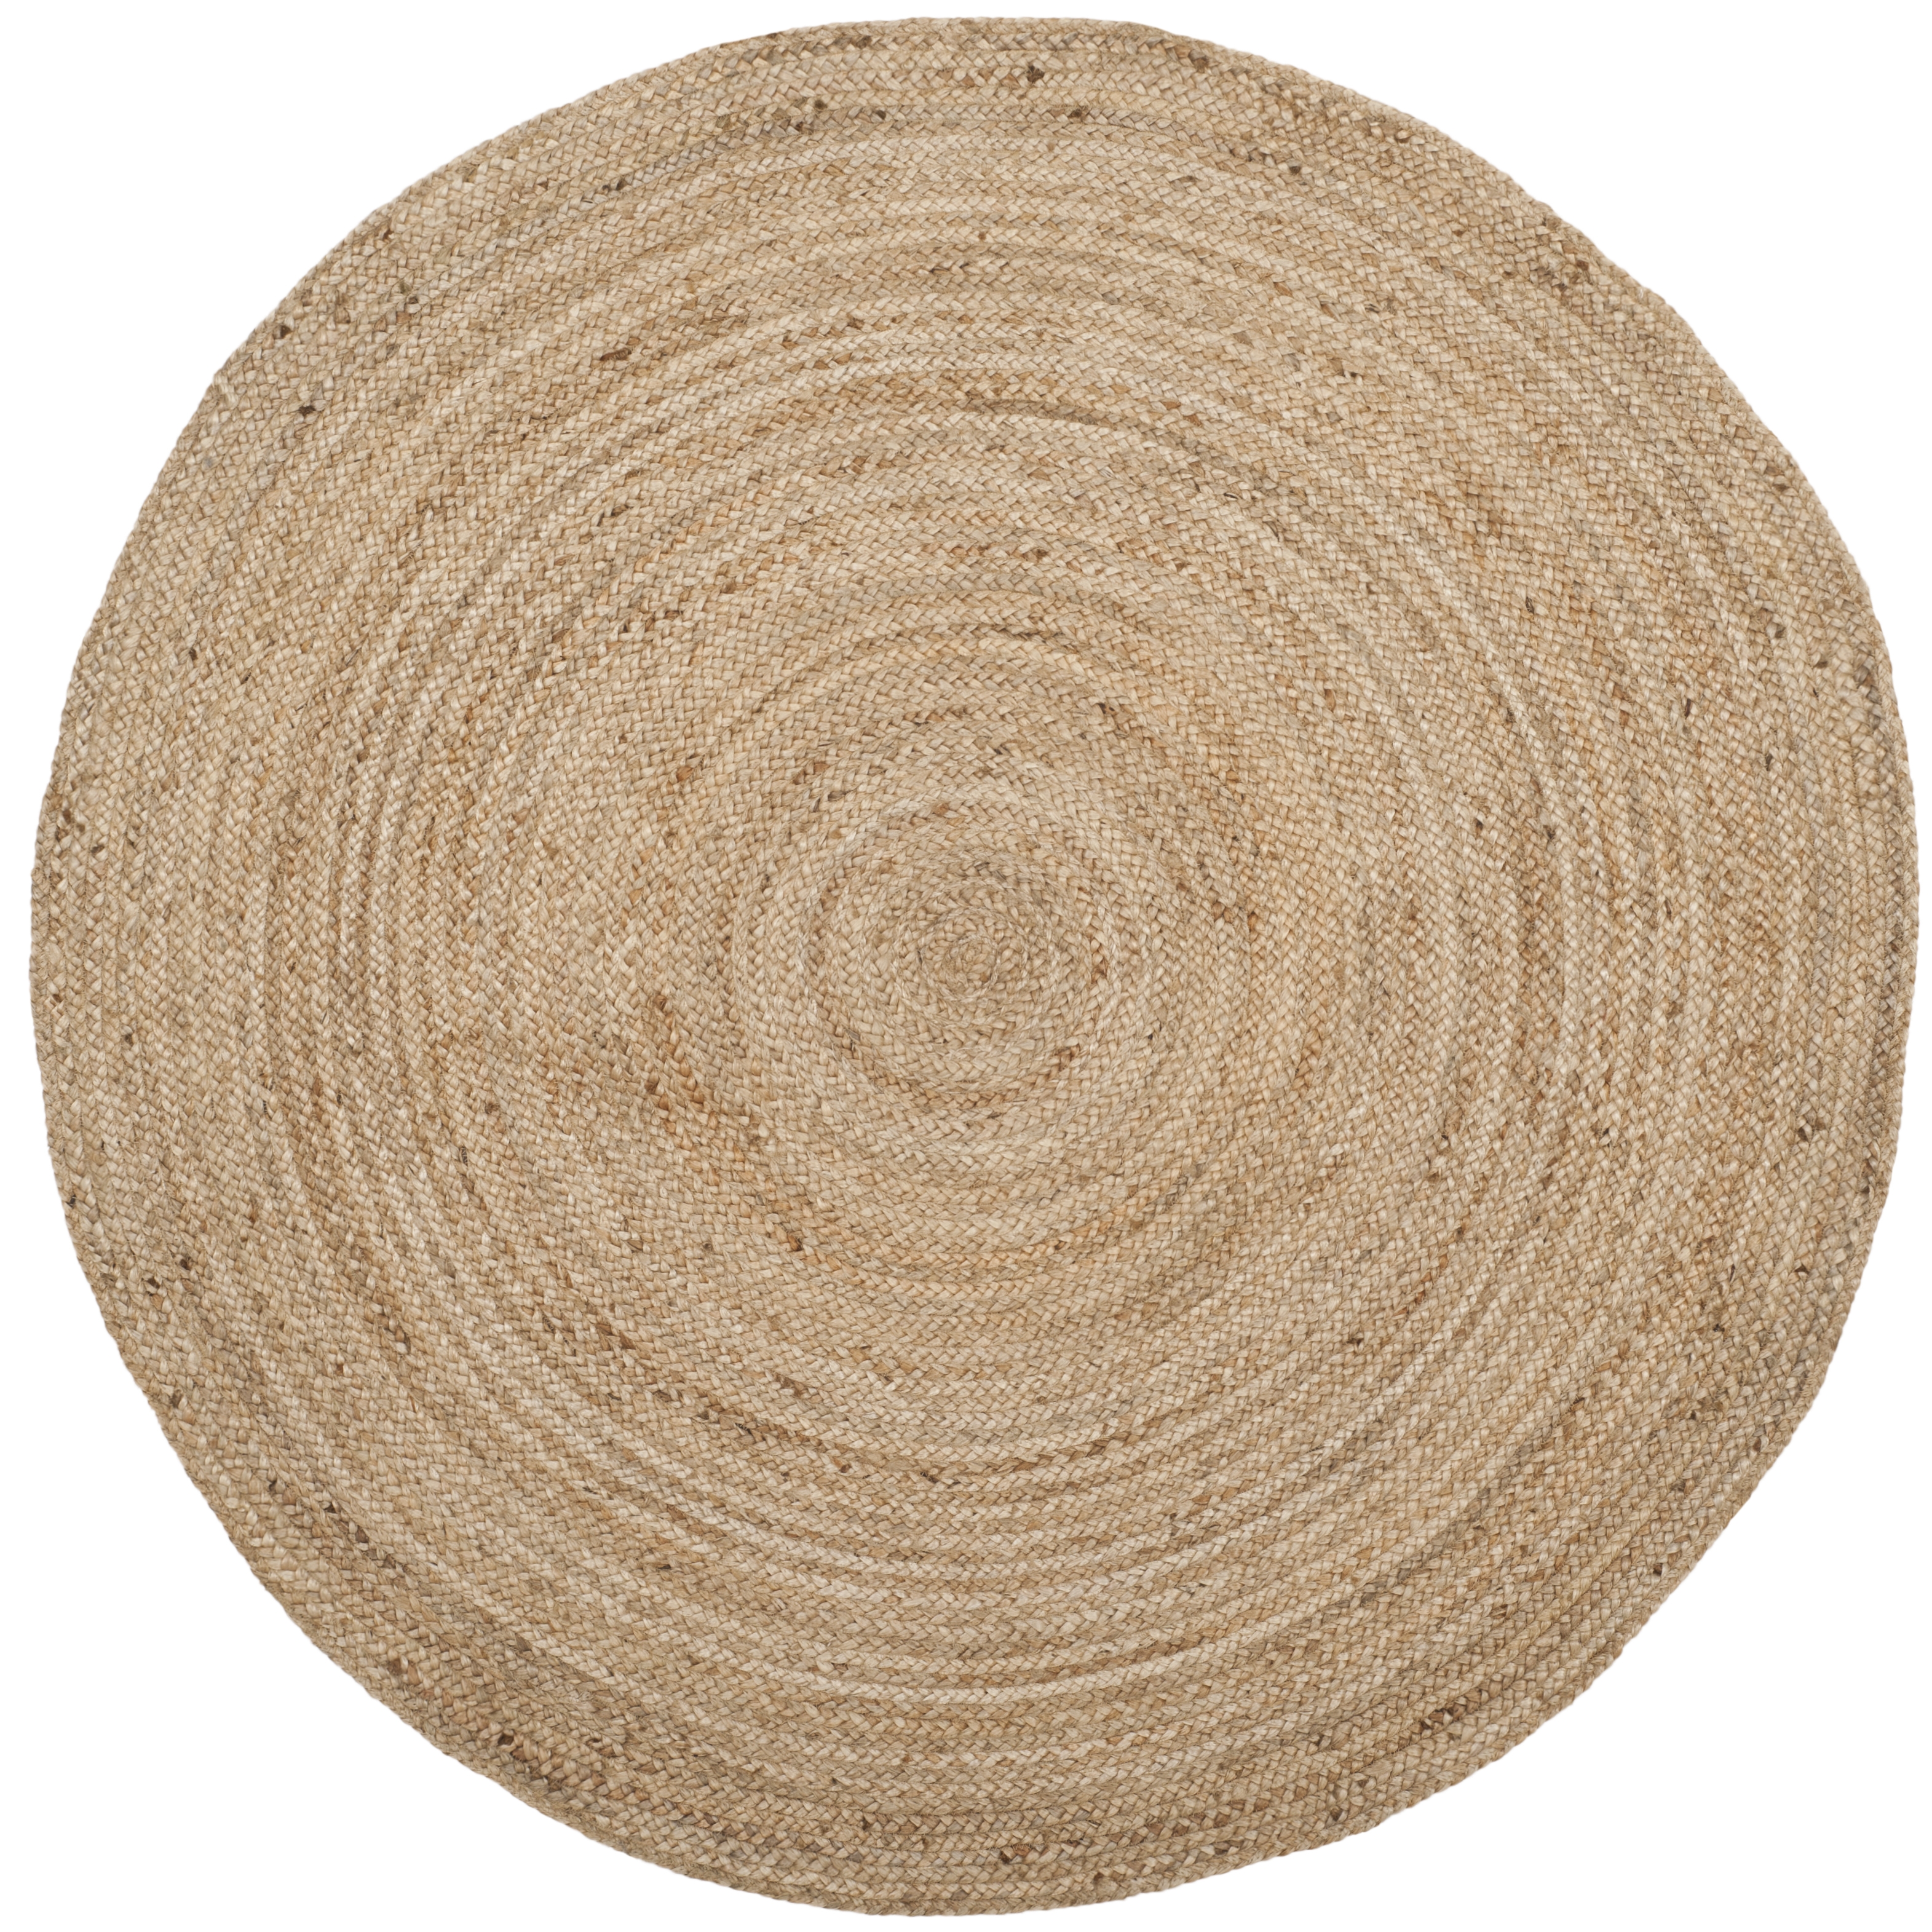 Torey Round Rug, 6' x 6' - Image 0